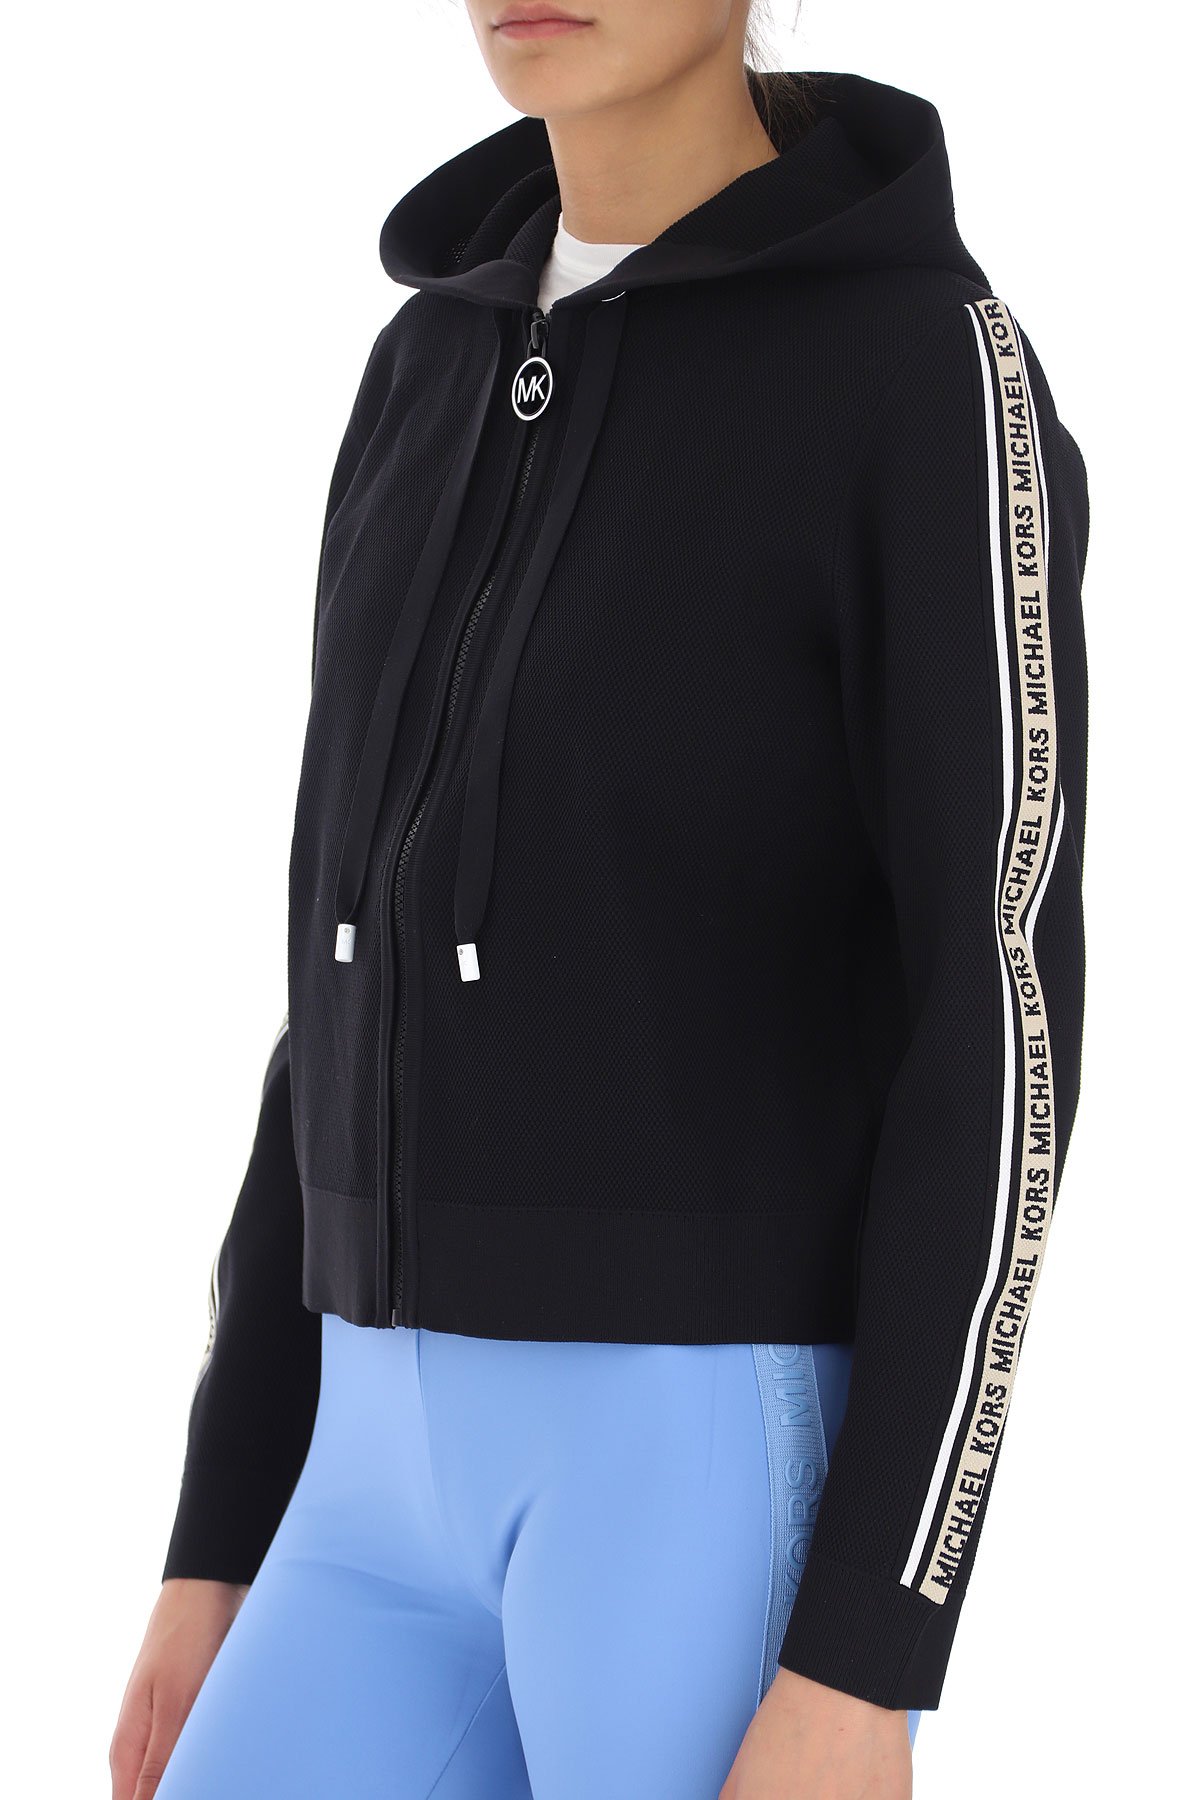 Womens Clothing Michael Kors, Style code: ms1601l1fw-black-